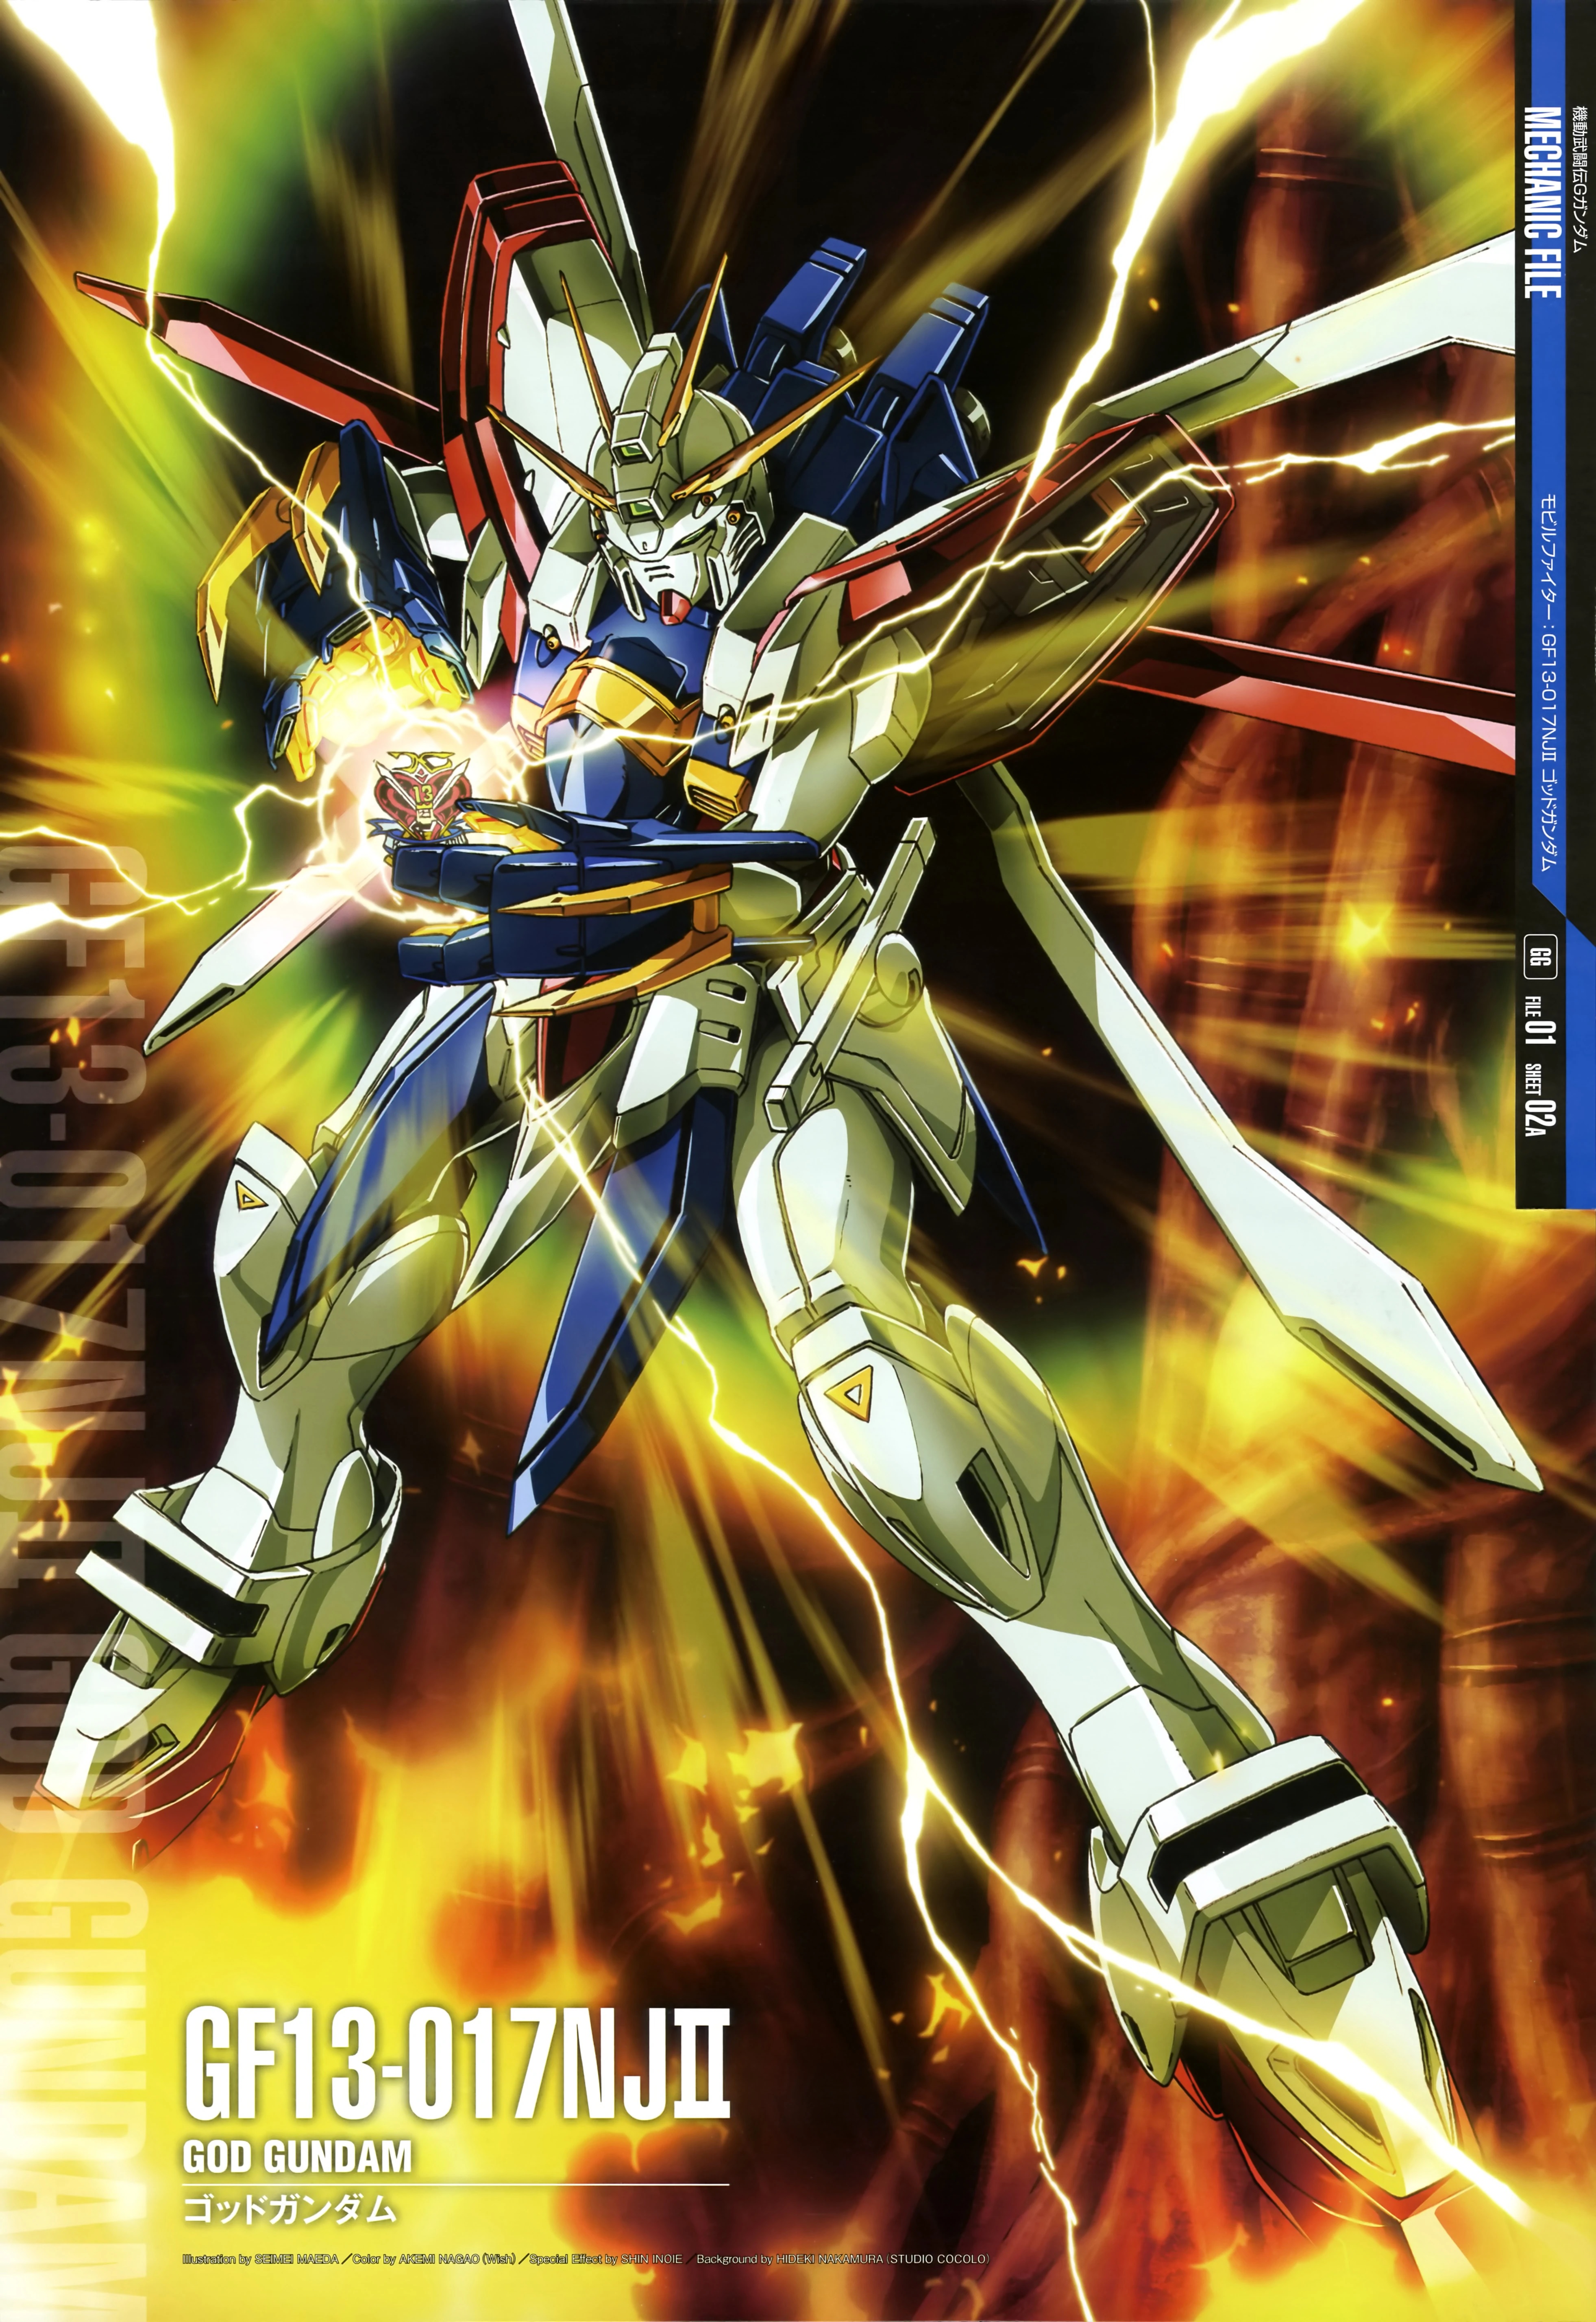 Anime 3925x5709 anime mechs Gundam Mobile Fighter G Gundam Super Robot Taisen God Gundam artwork digital art fan art